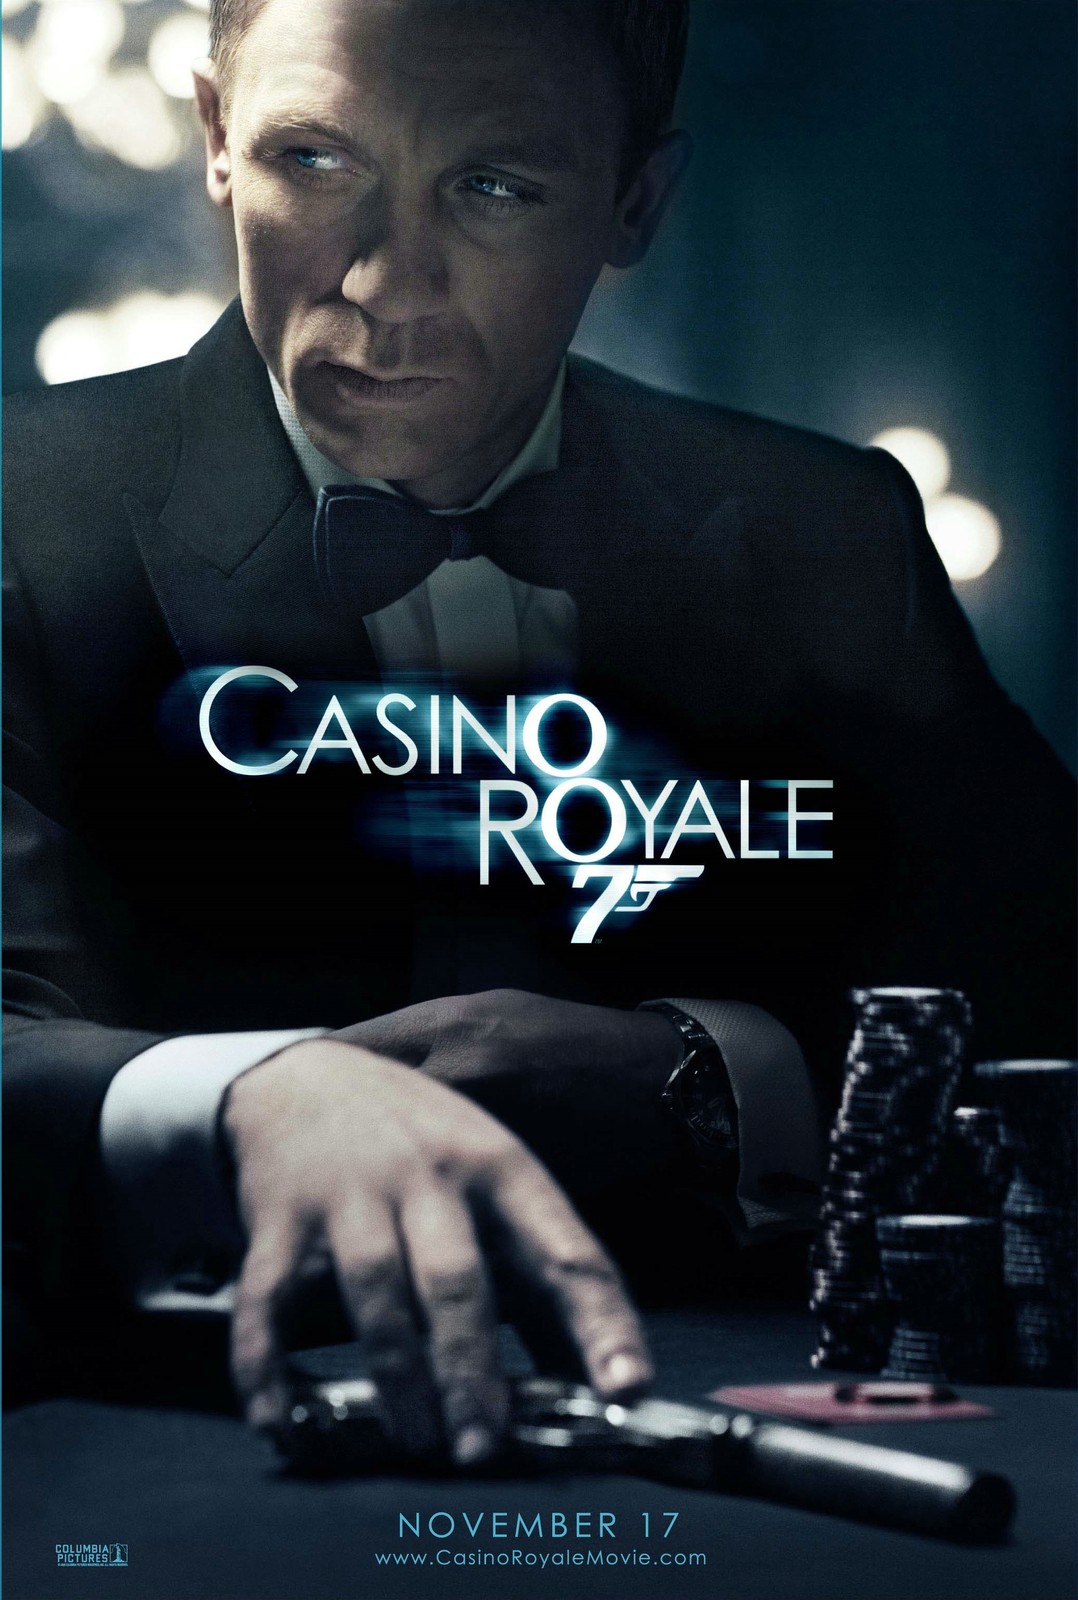 Casino Royale James Bond Movie Poster Art Film Print Size 24x36 27x40 32x48 #3